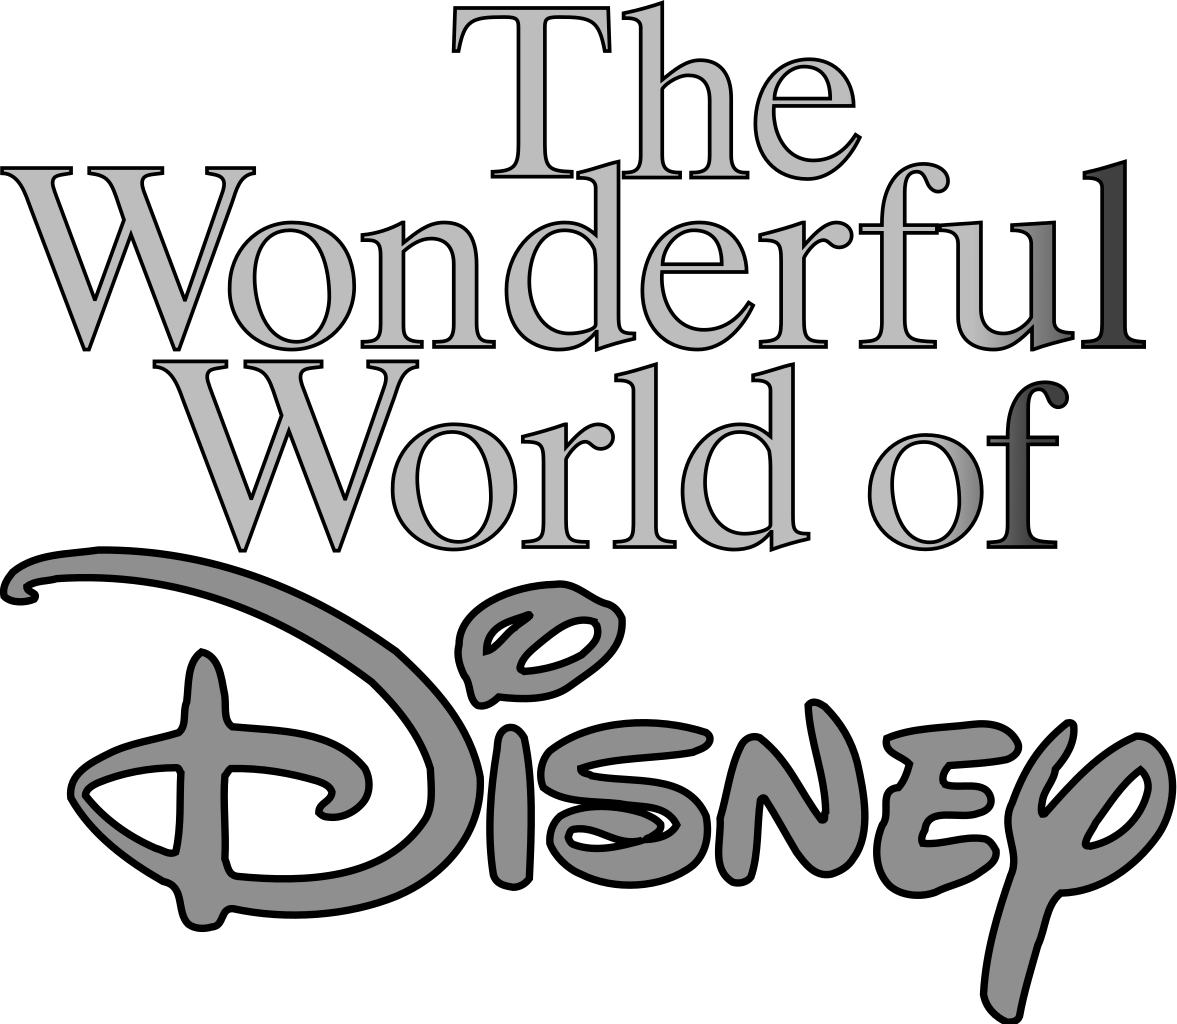 Download File:The Wonderful World of Disney Logo.svg - Wikimedia ...